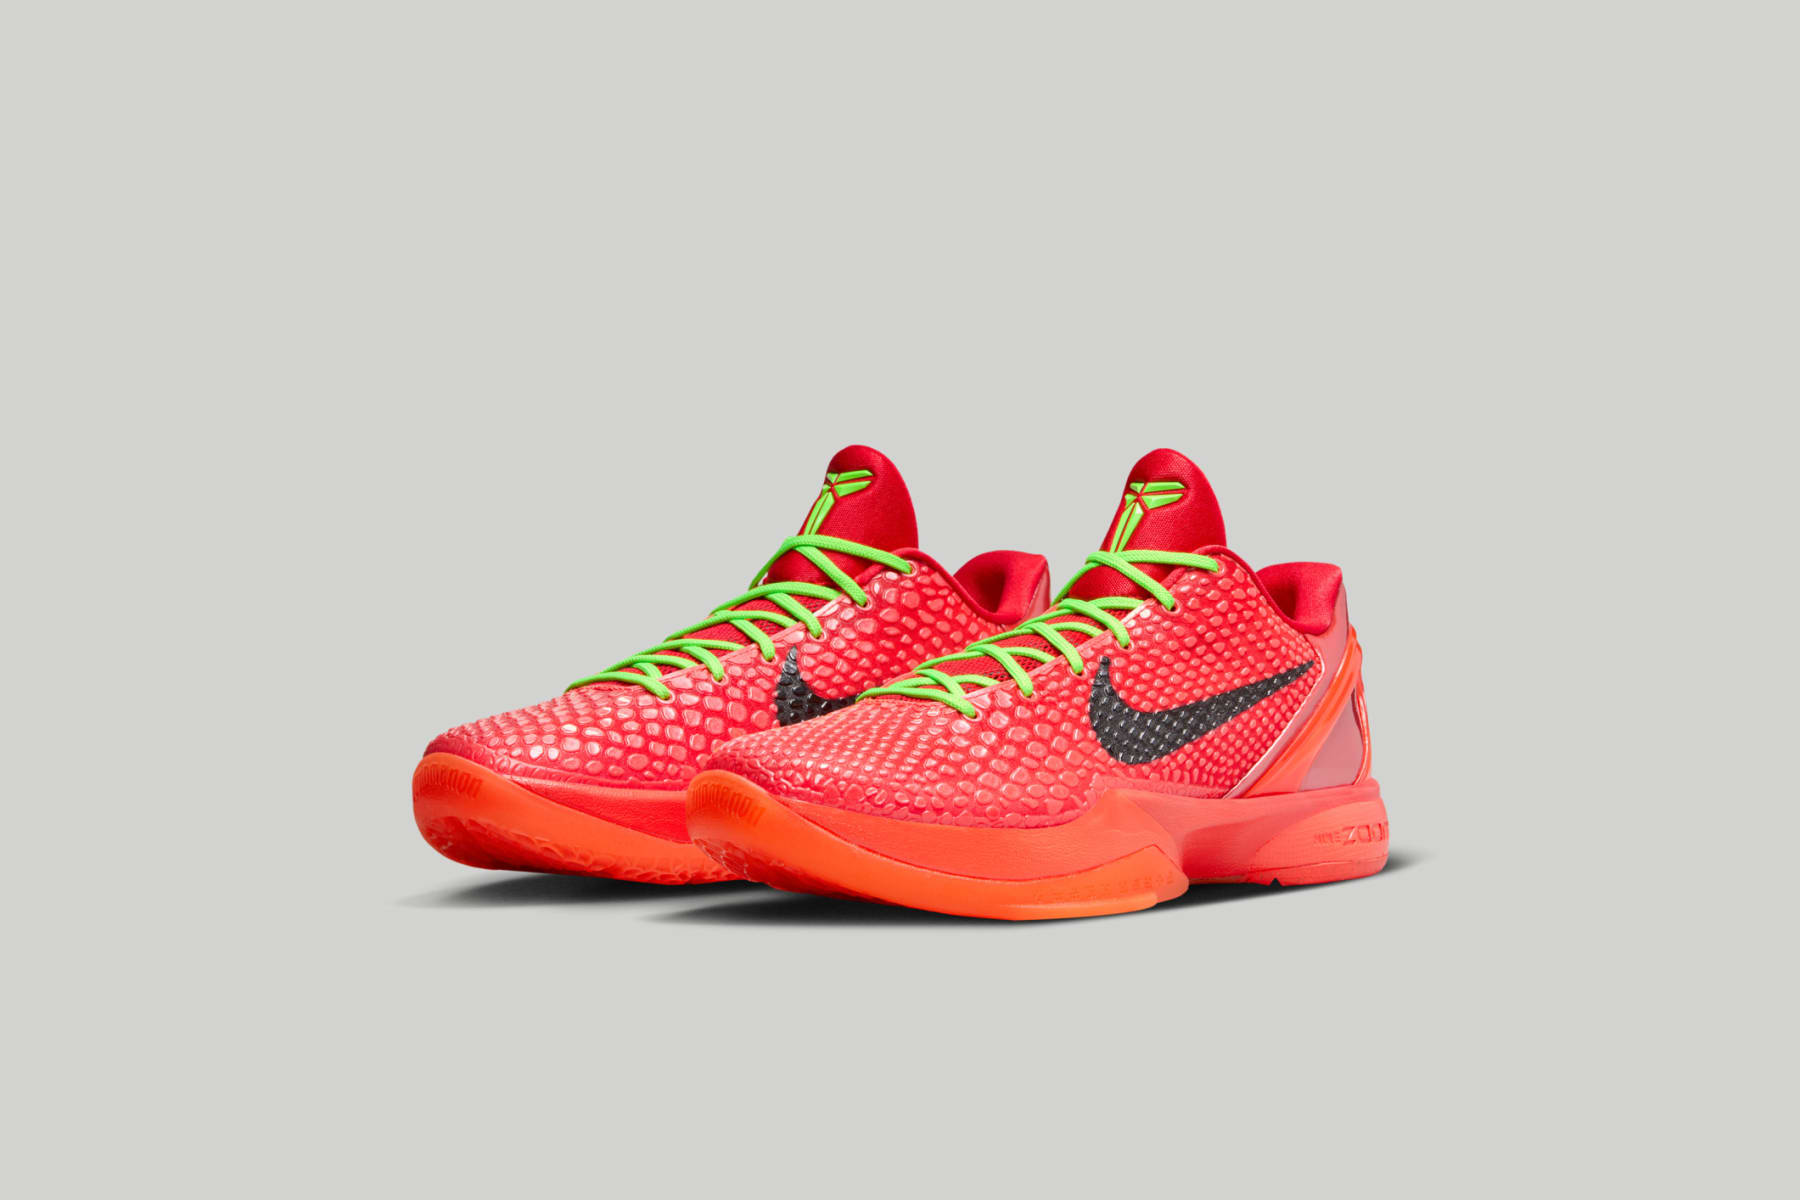 Nike Kobe 6 Protro shoes shown against gray background.